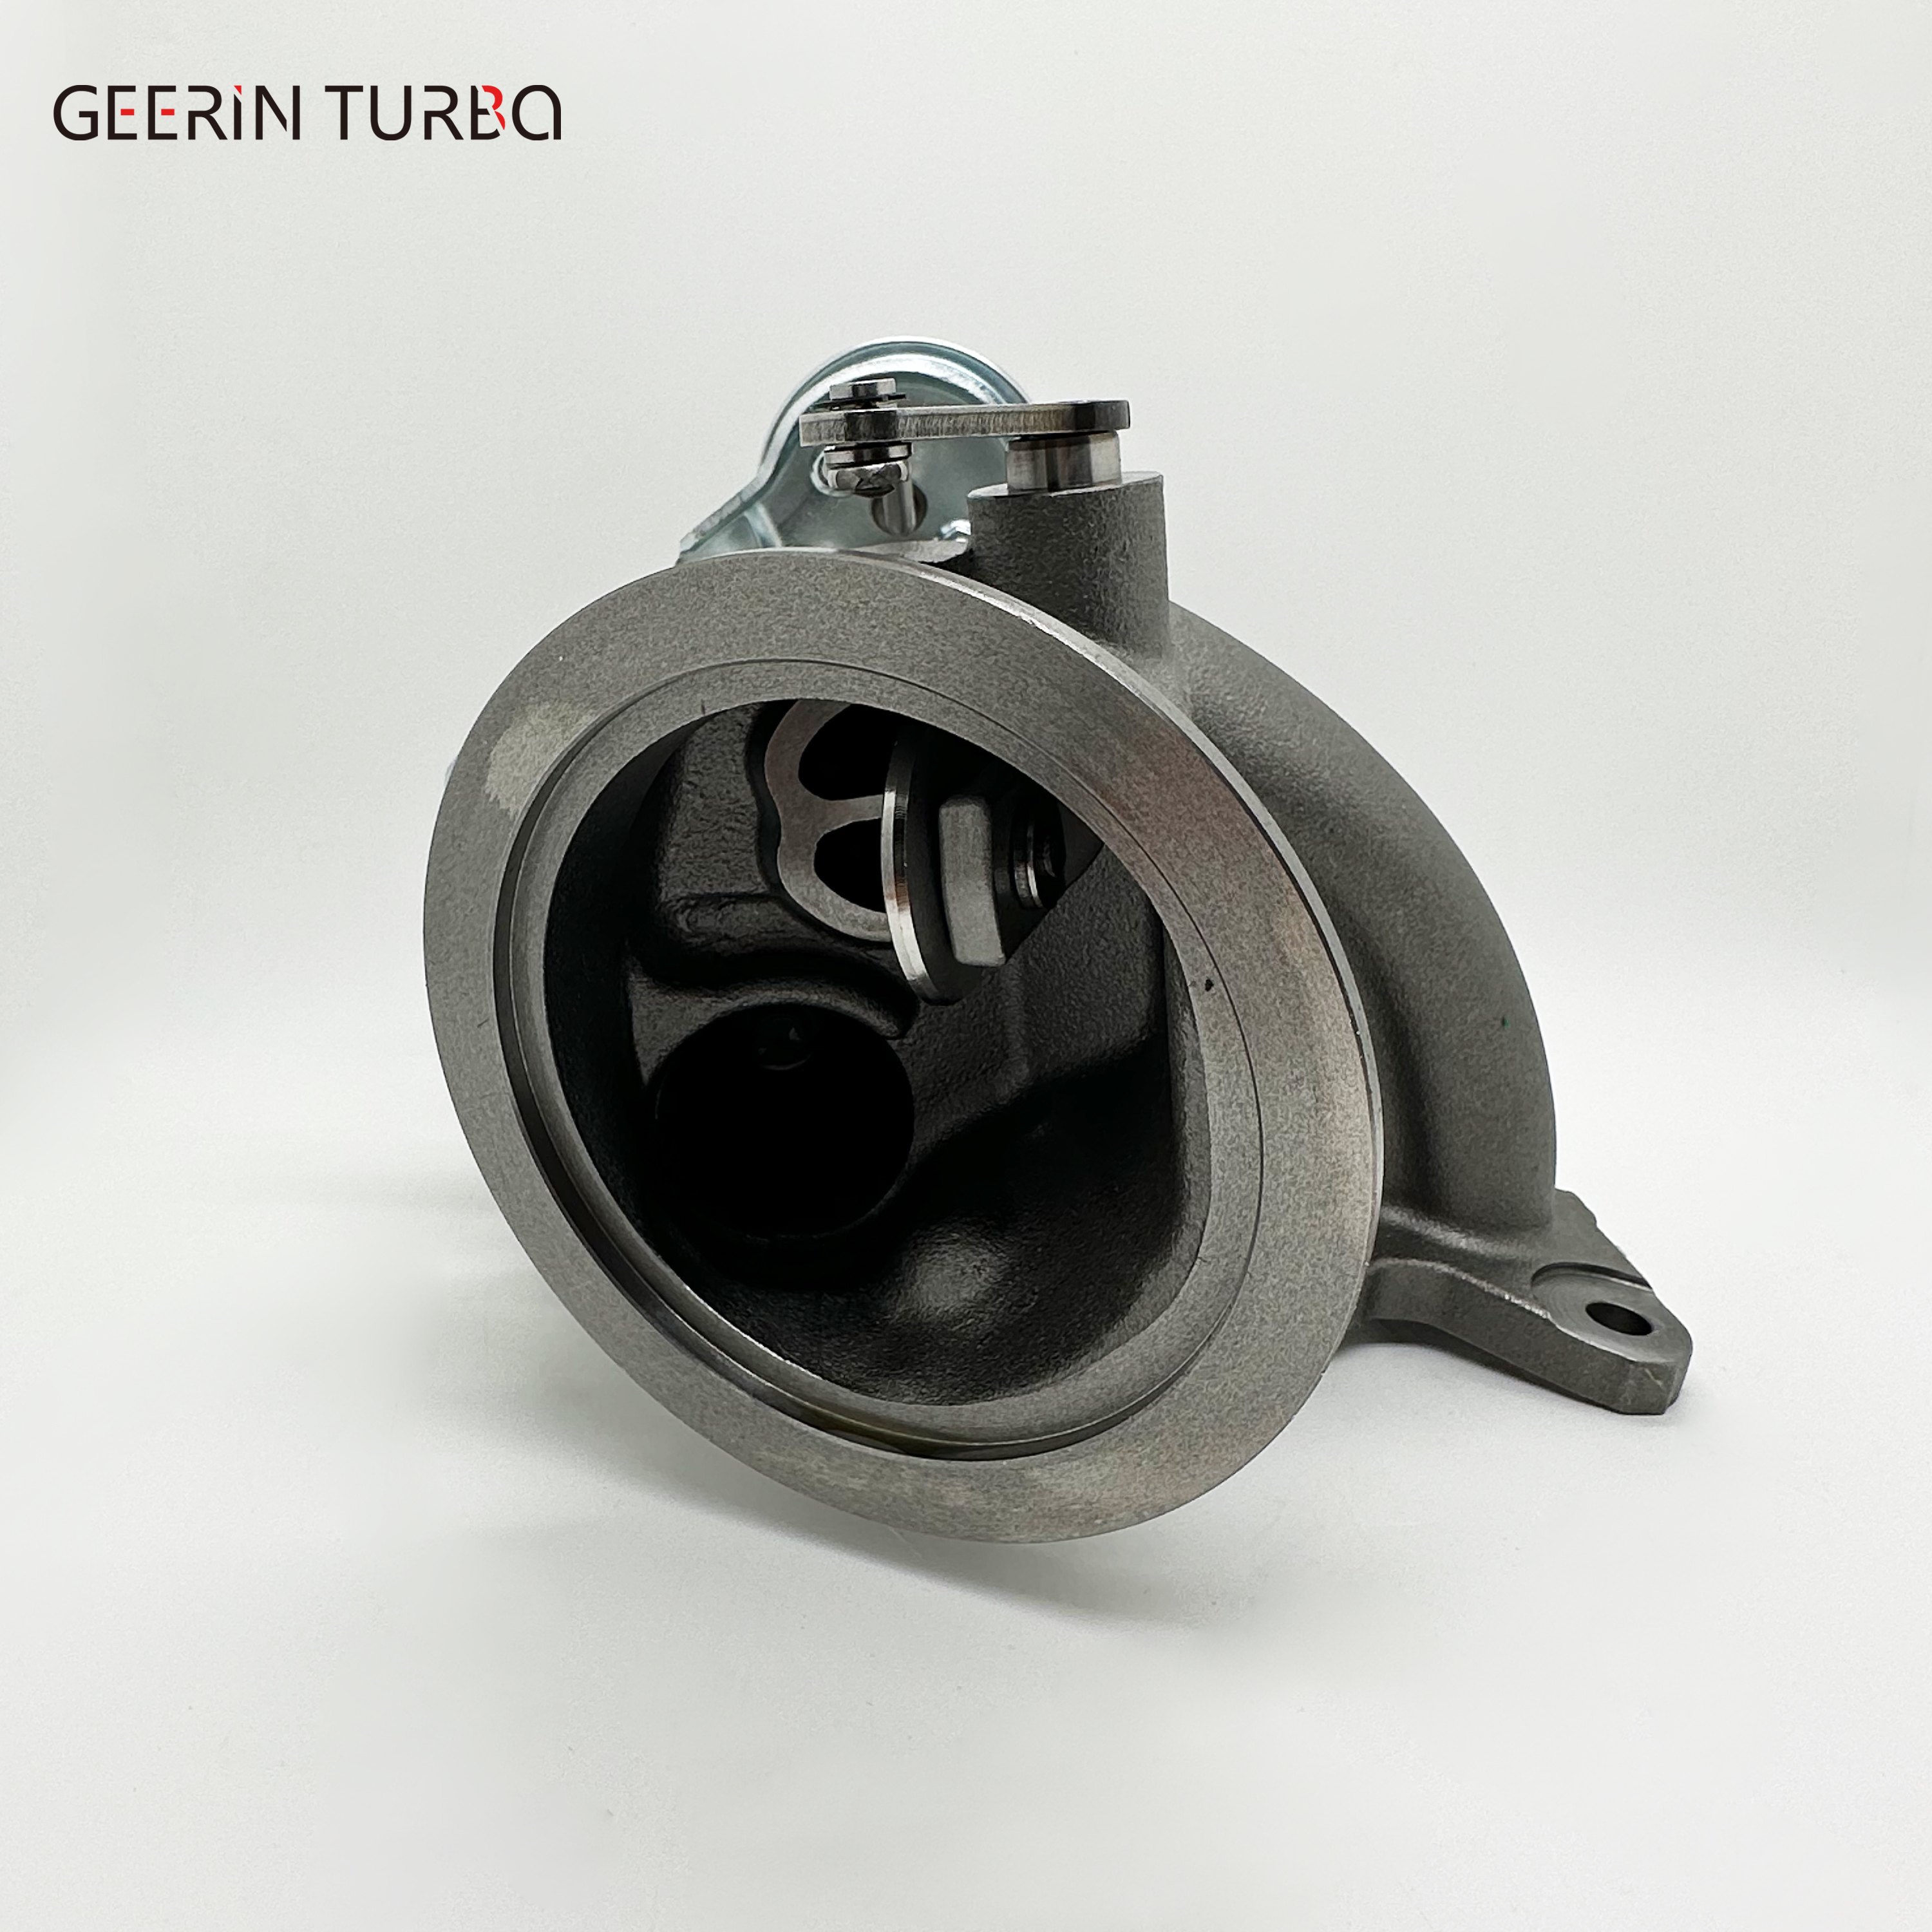 Turbo CT16V 17201-36010 17201-36020 Diesel Engine Turbocharger For Lexus GS 200t Factory